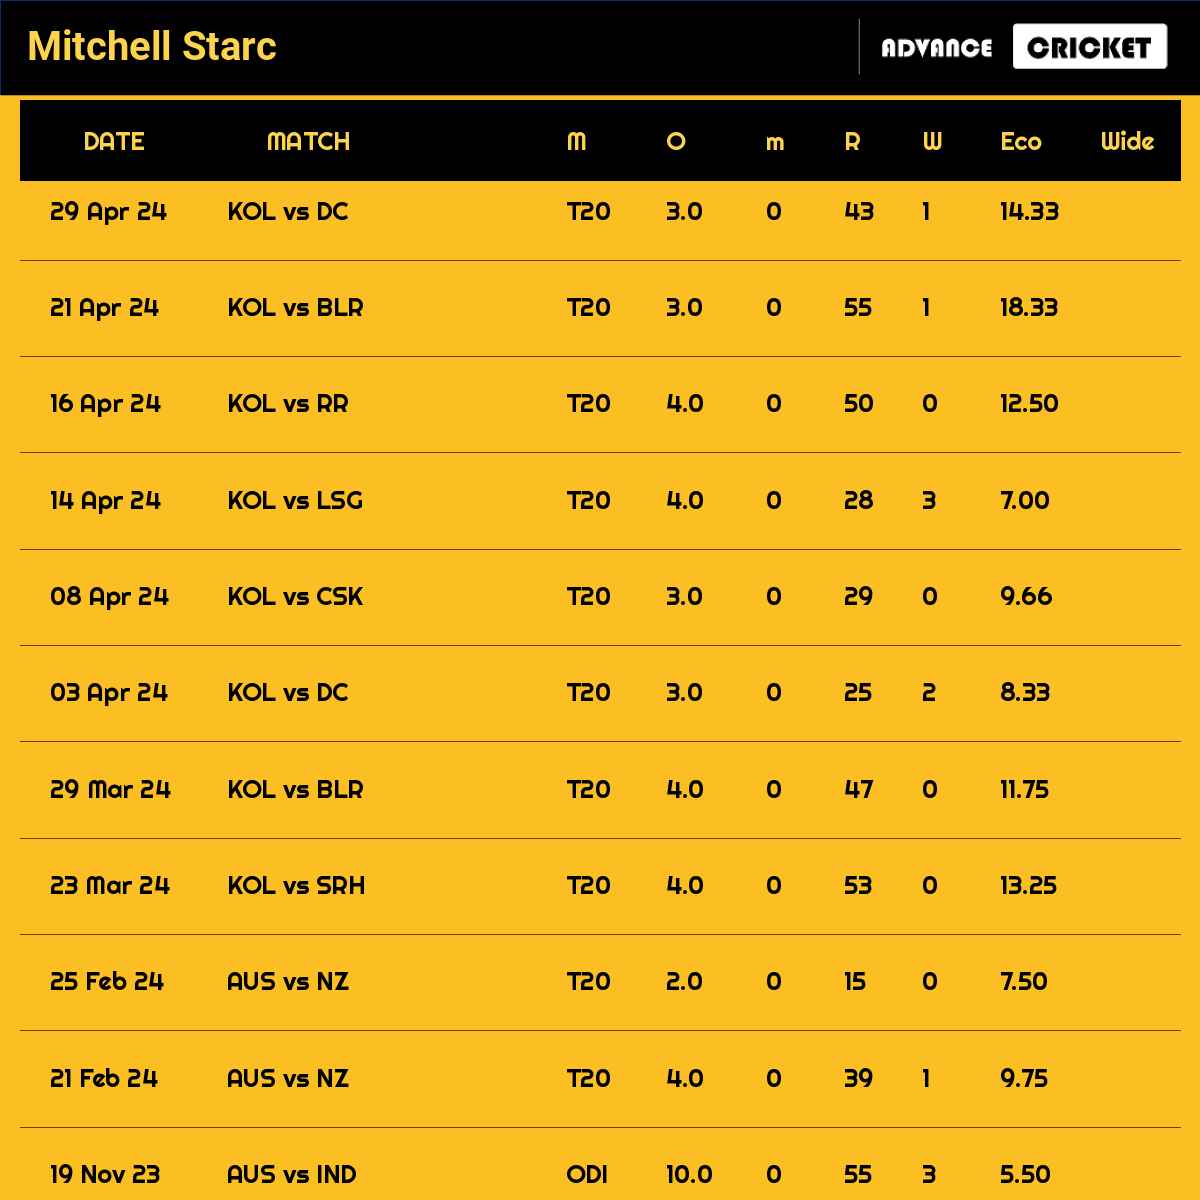 Mitchell Starc recent matches